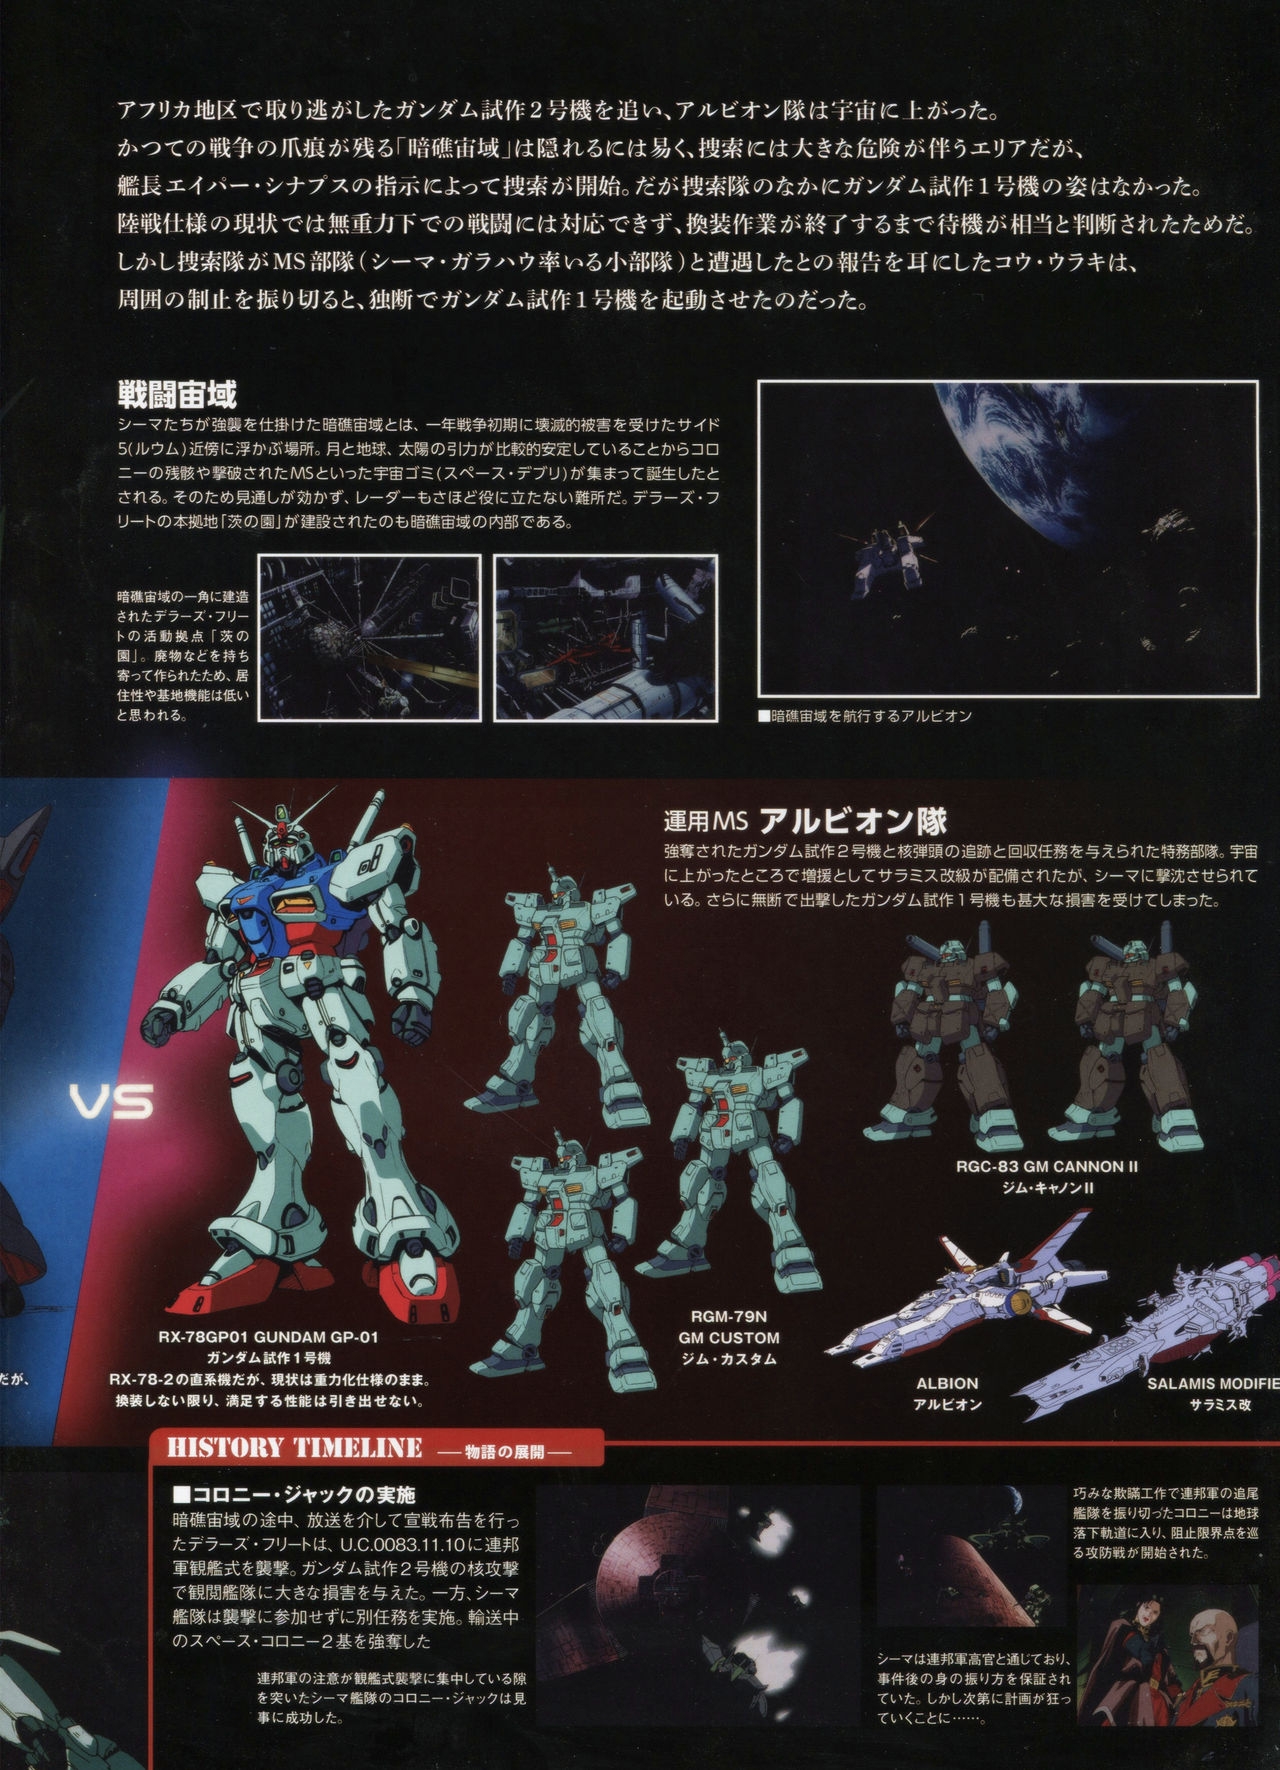 Gundam Mobile Suit Bible 19 5